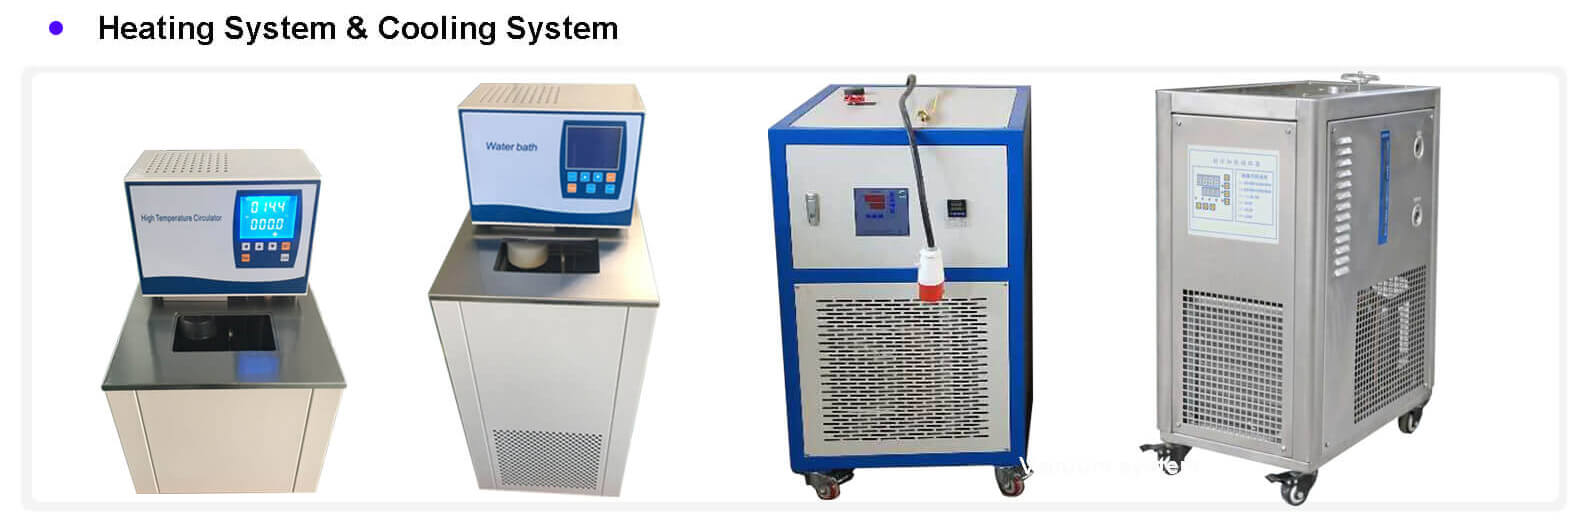 molecular distillation equipment temperature control system